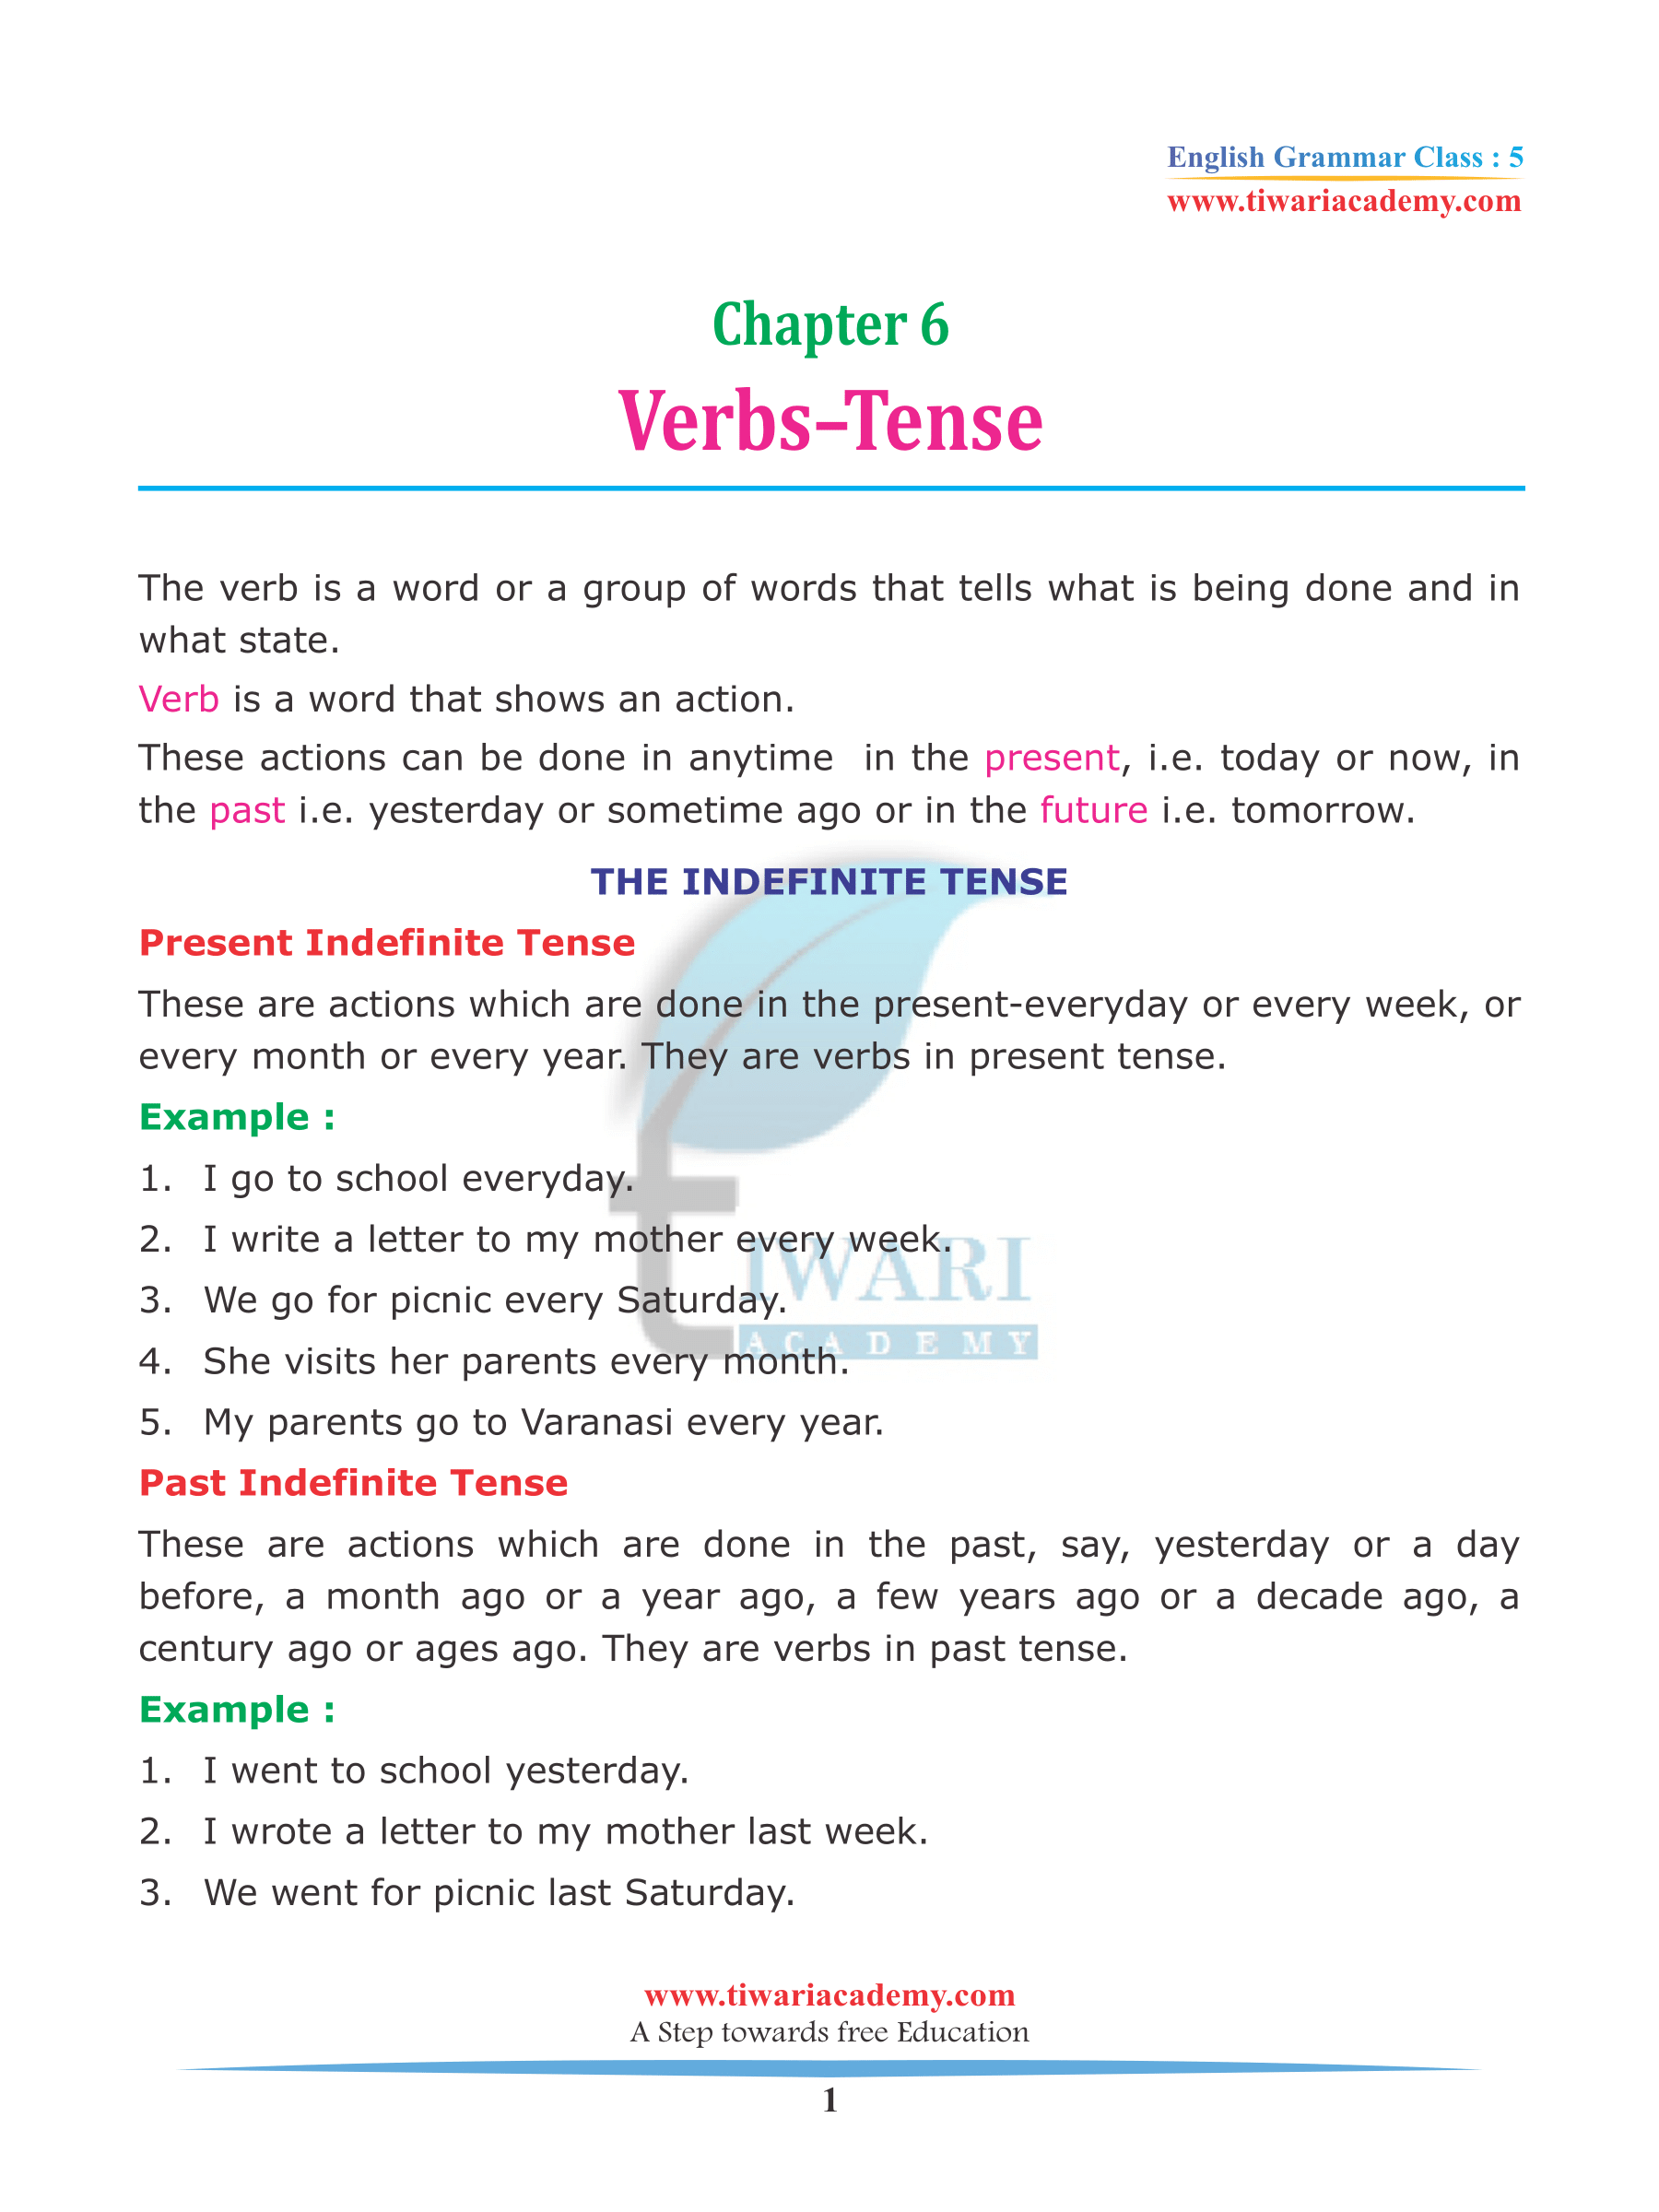 Class 5 English Grammar Chapter 6 Verb and Tense